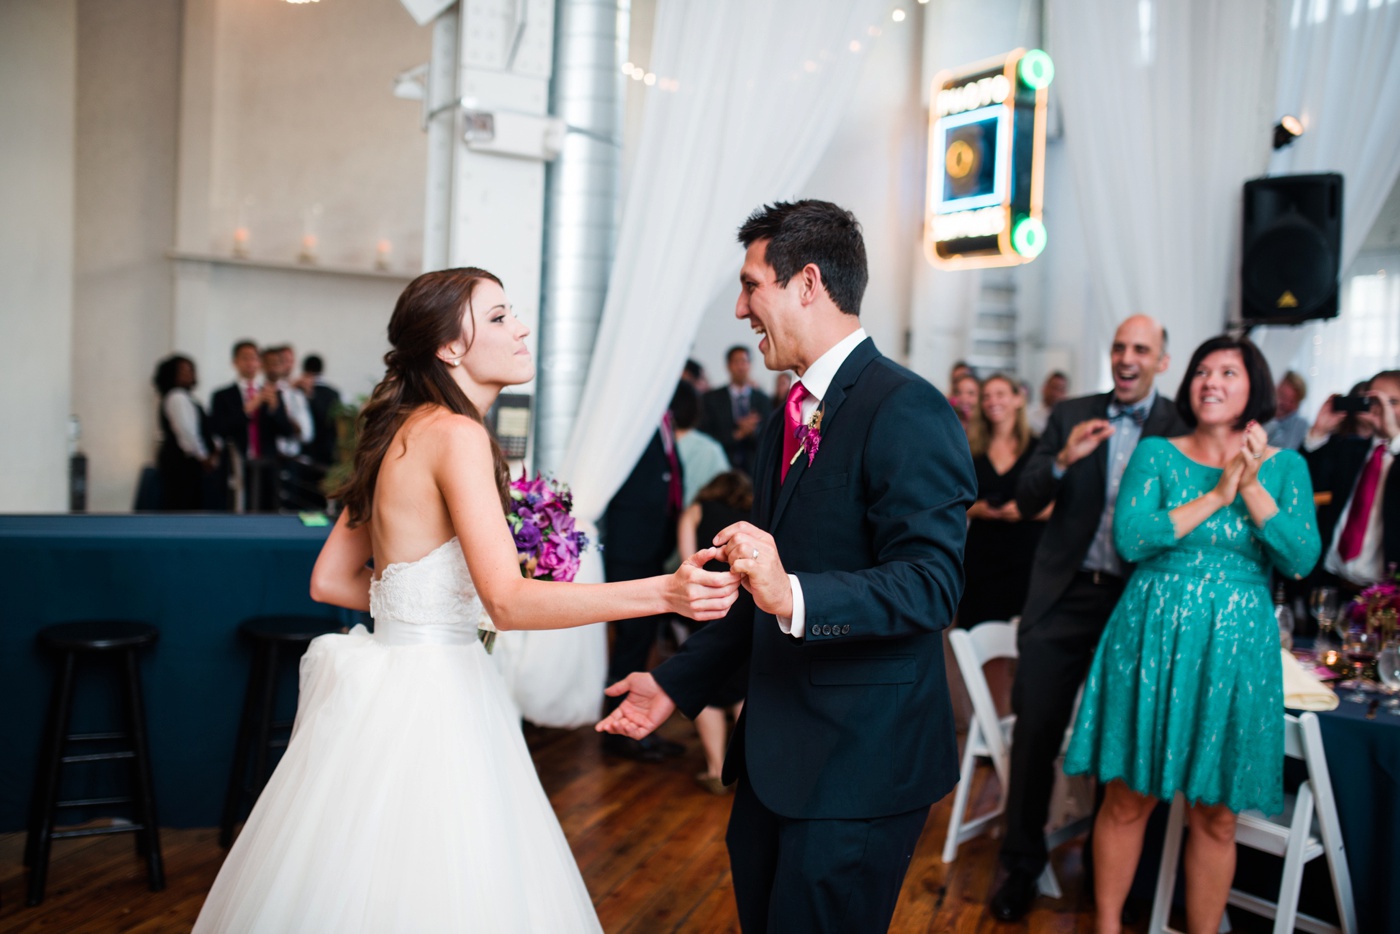 Sarah + Chris - Power Plant Productions Wedding Reception - Philadelphia Wedding Photographer photo